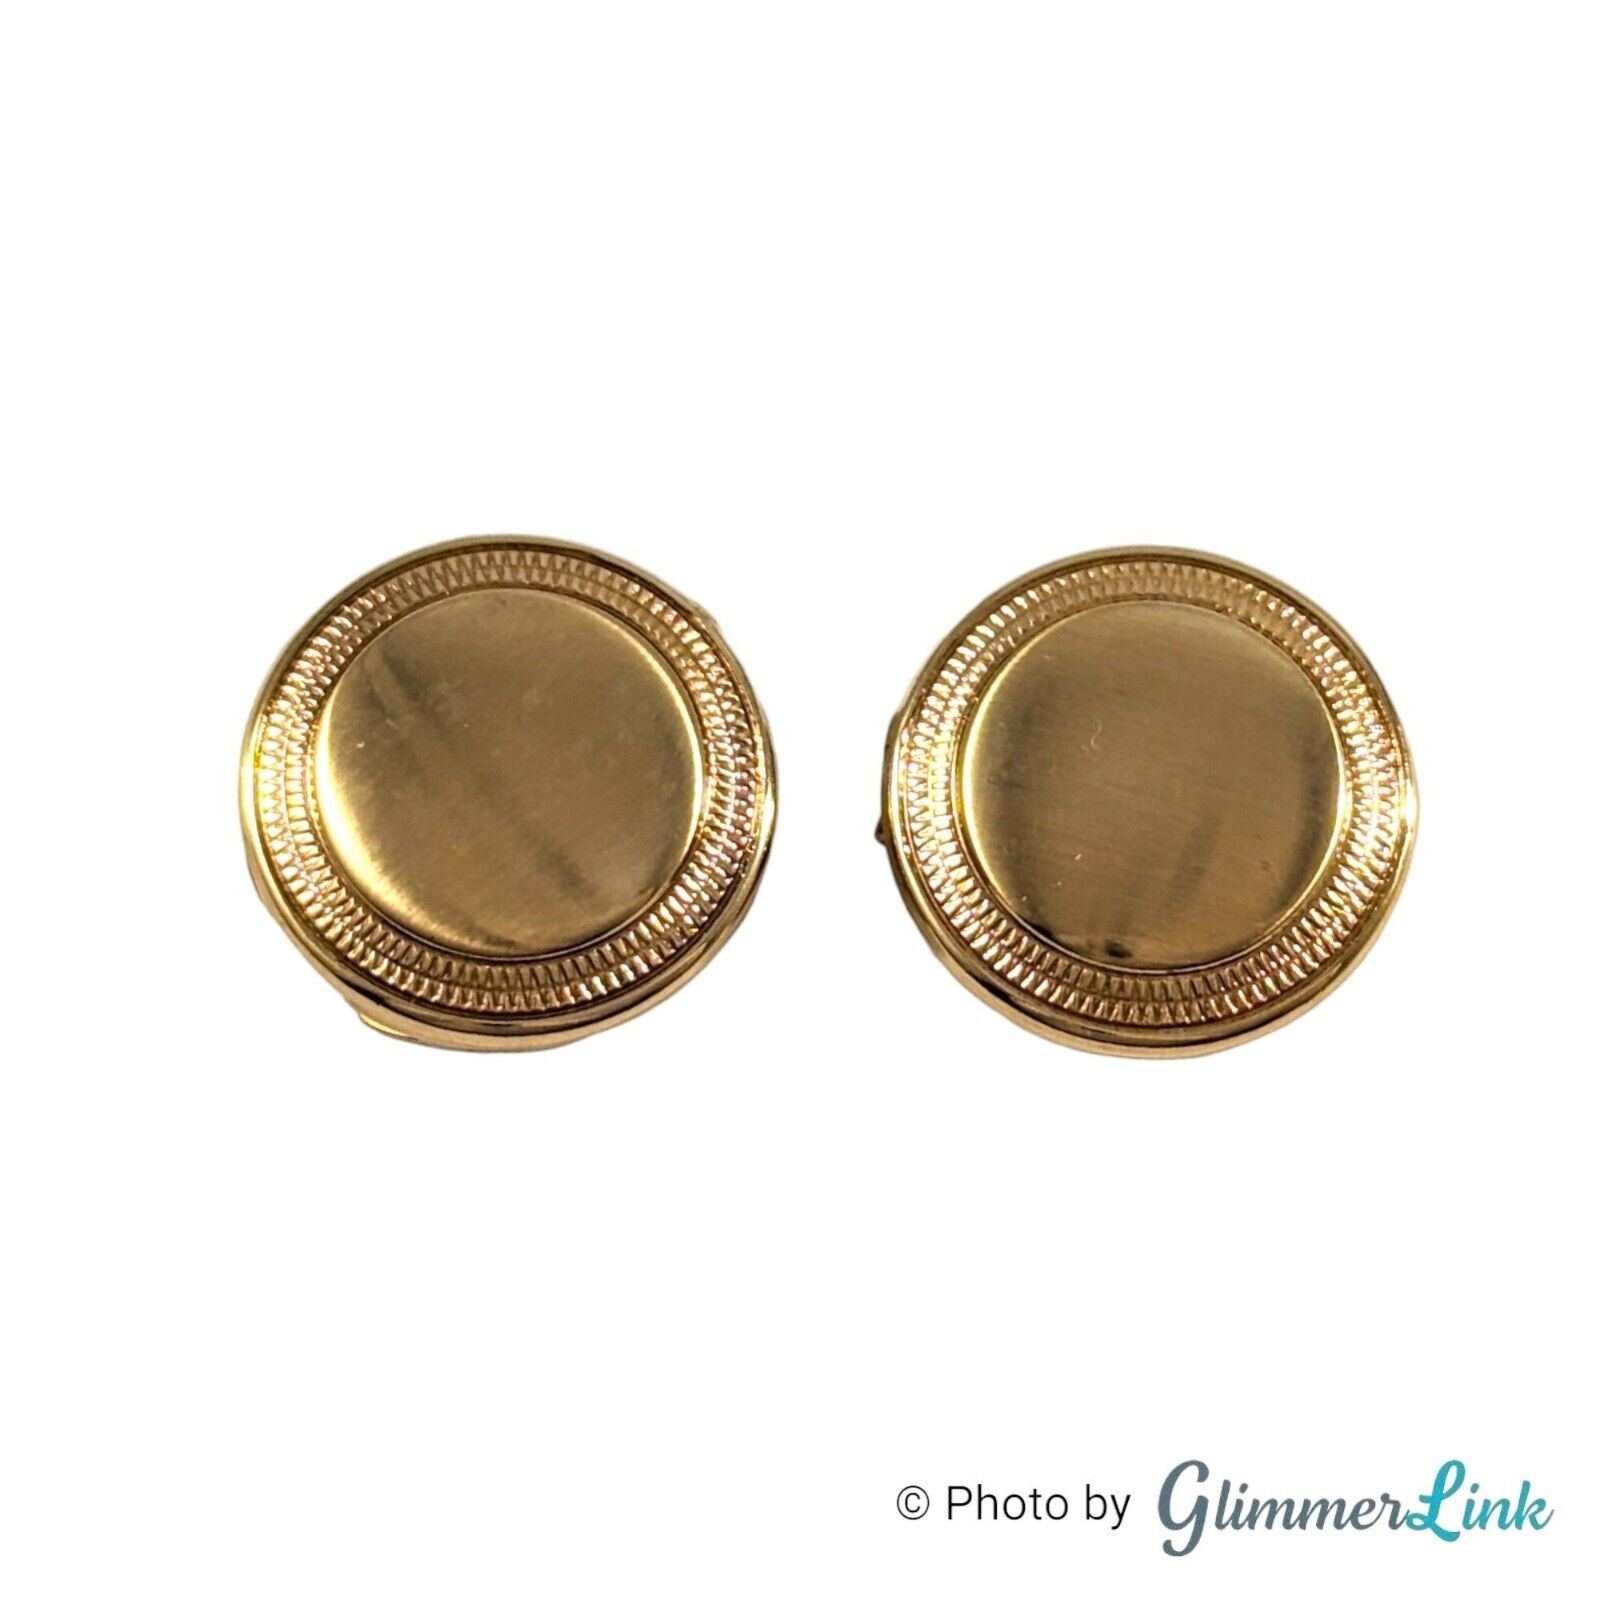 Vintage Round Elegant Gold Tone Unisex Button Covers, Button Cuffs Set of 2